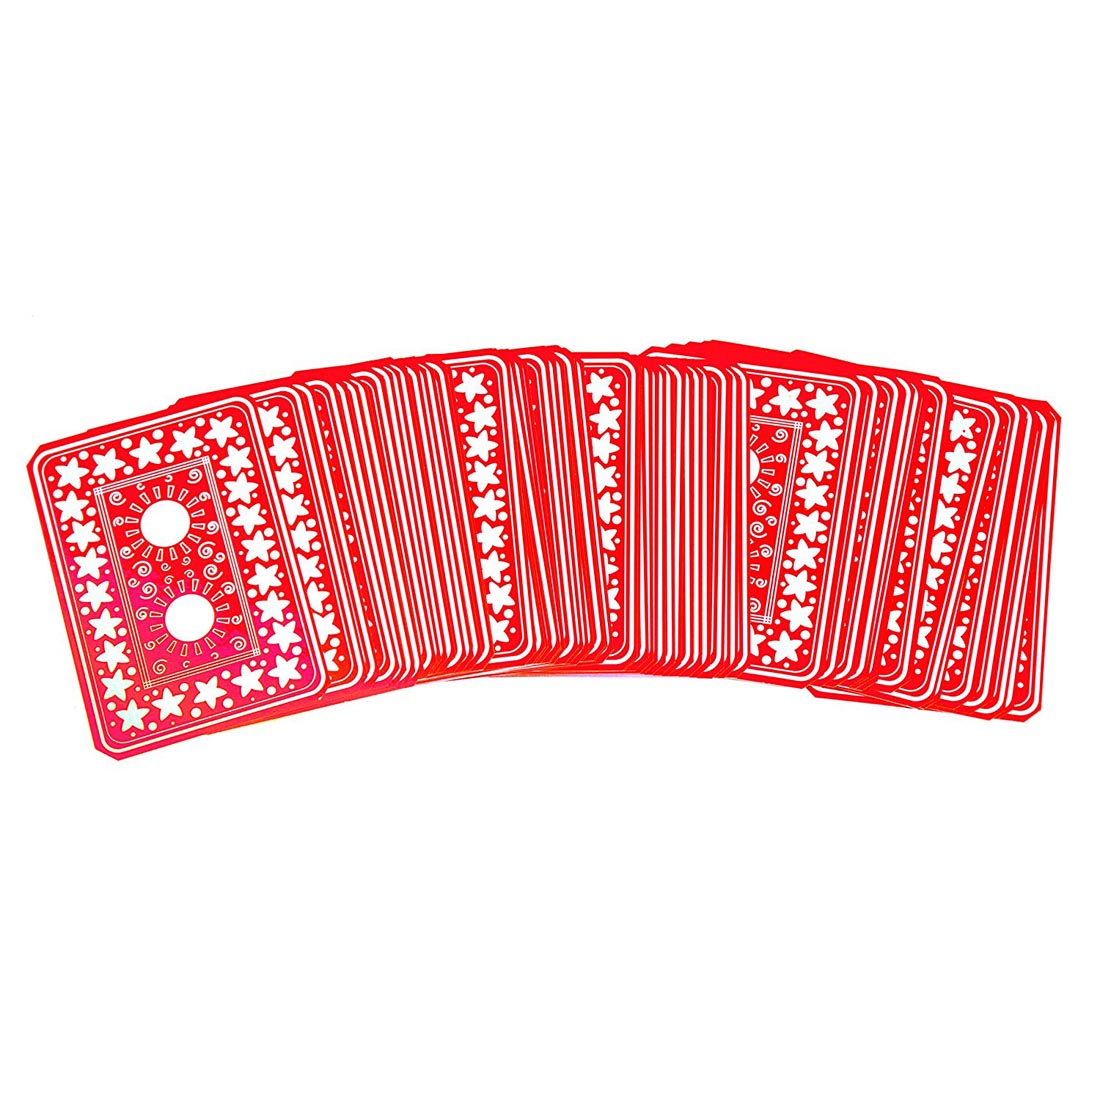 Roylco Blank Playing Cards